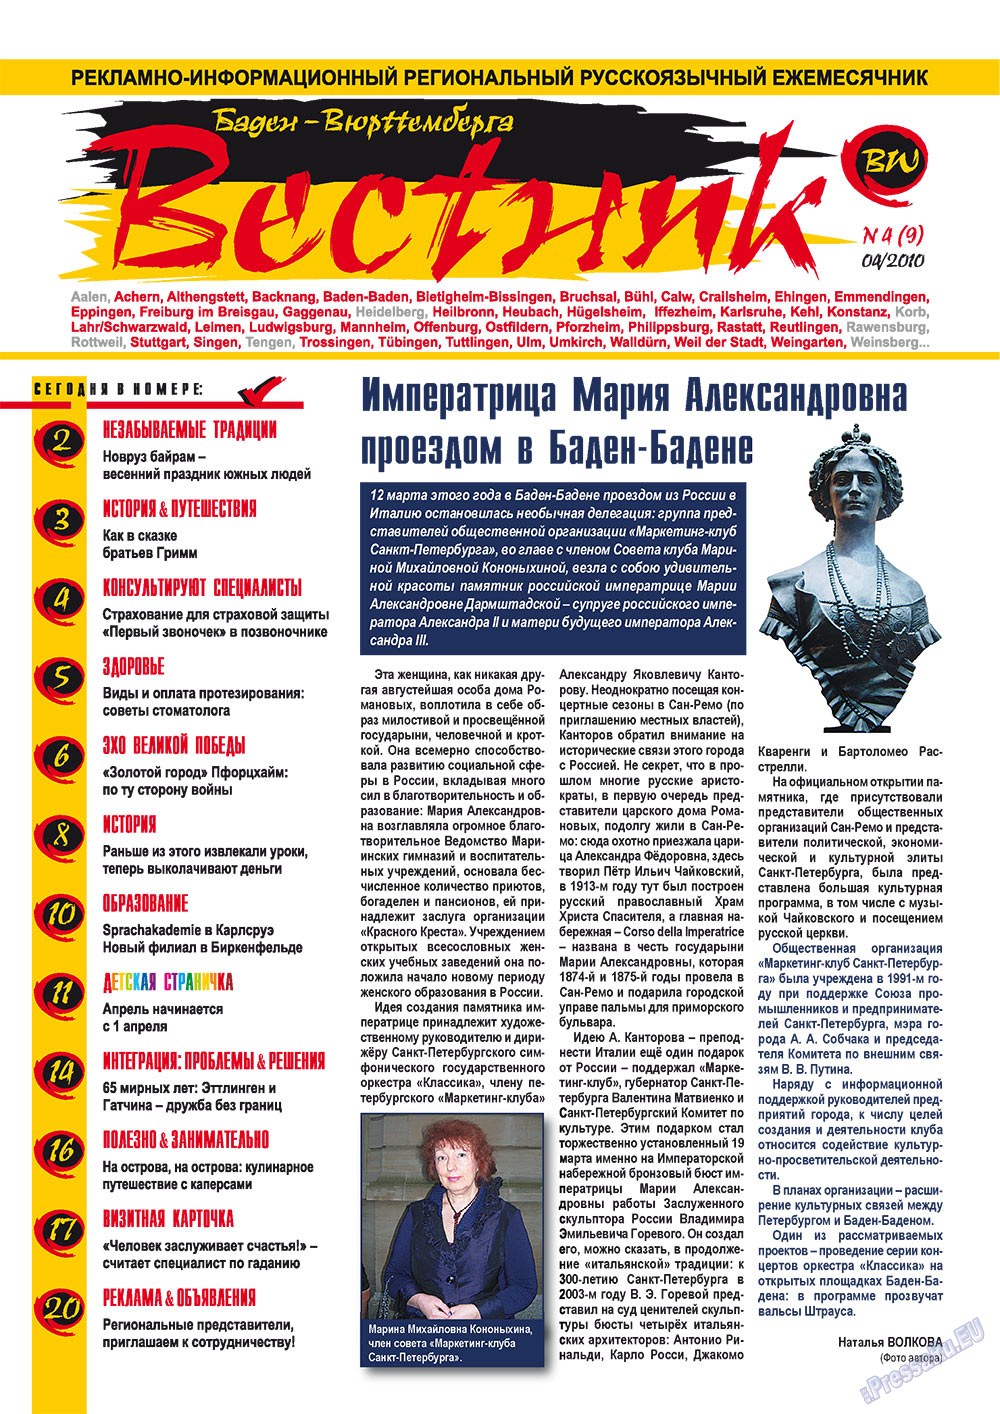 Вестник-info (журнал). 2010 год, номер 4, стр. 1